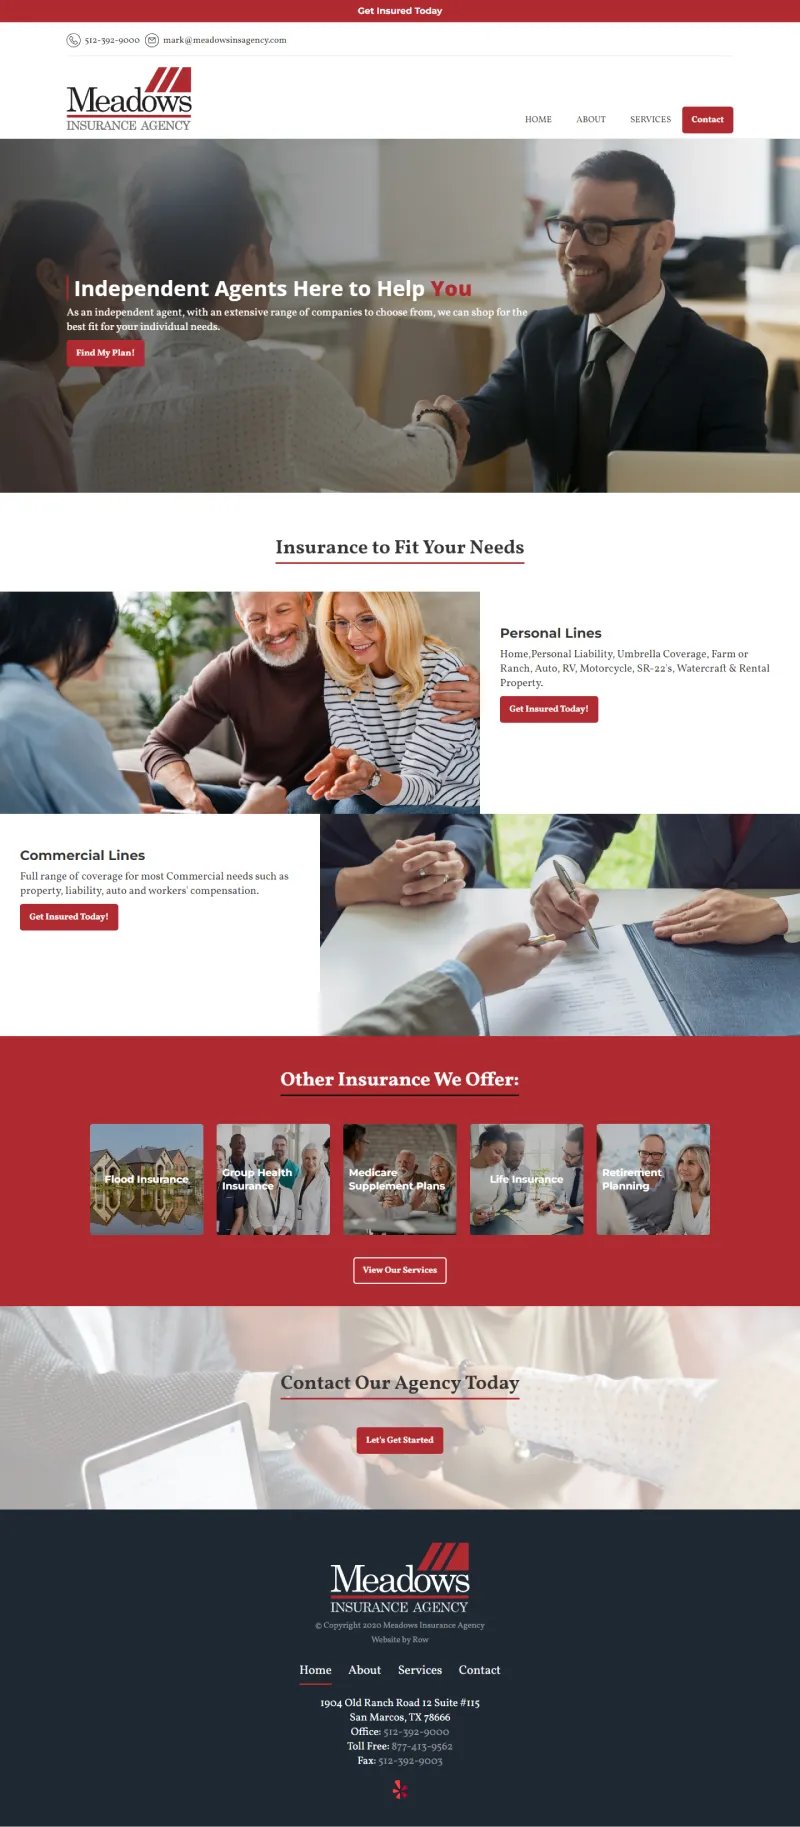 Meadow's Insurance Agency homepage website design